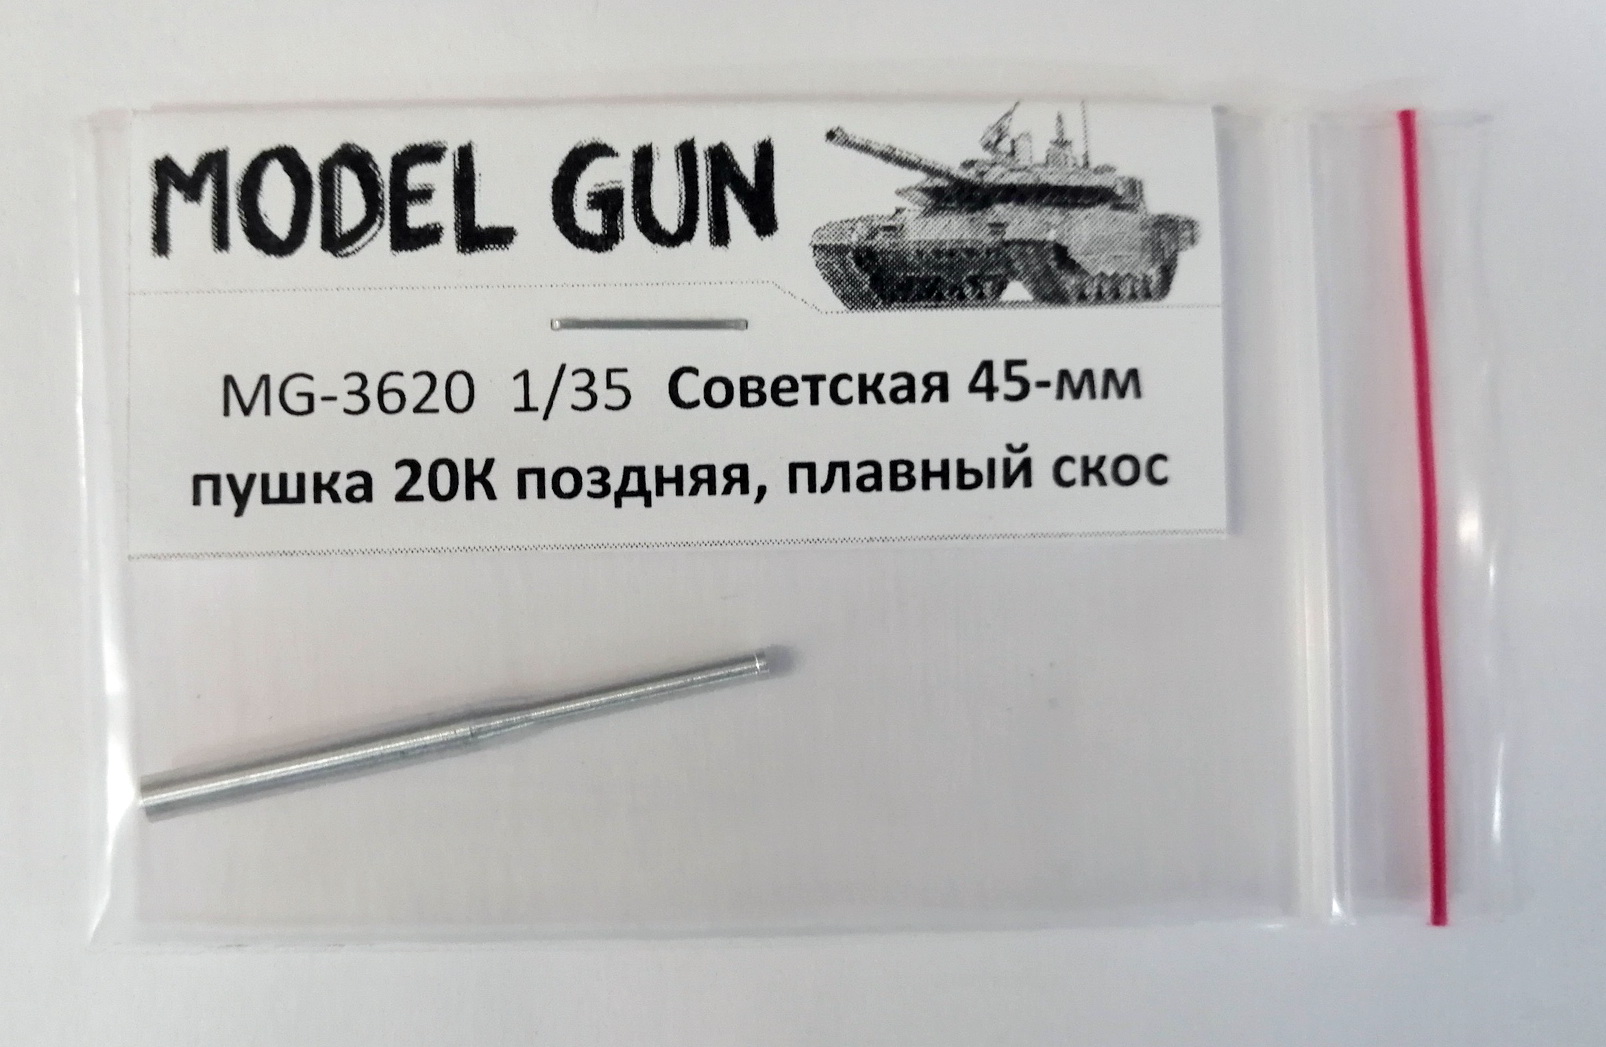 MG-3620  металлические стволы  45-мм 20К (поздняя) плавный конус Танк-80,26, БТ-7, Т-28, БА  (1:35)